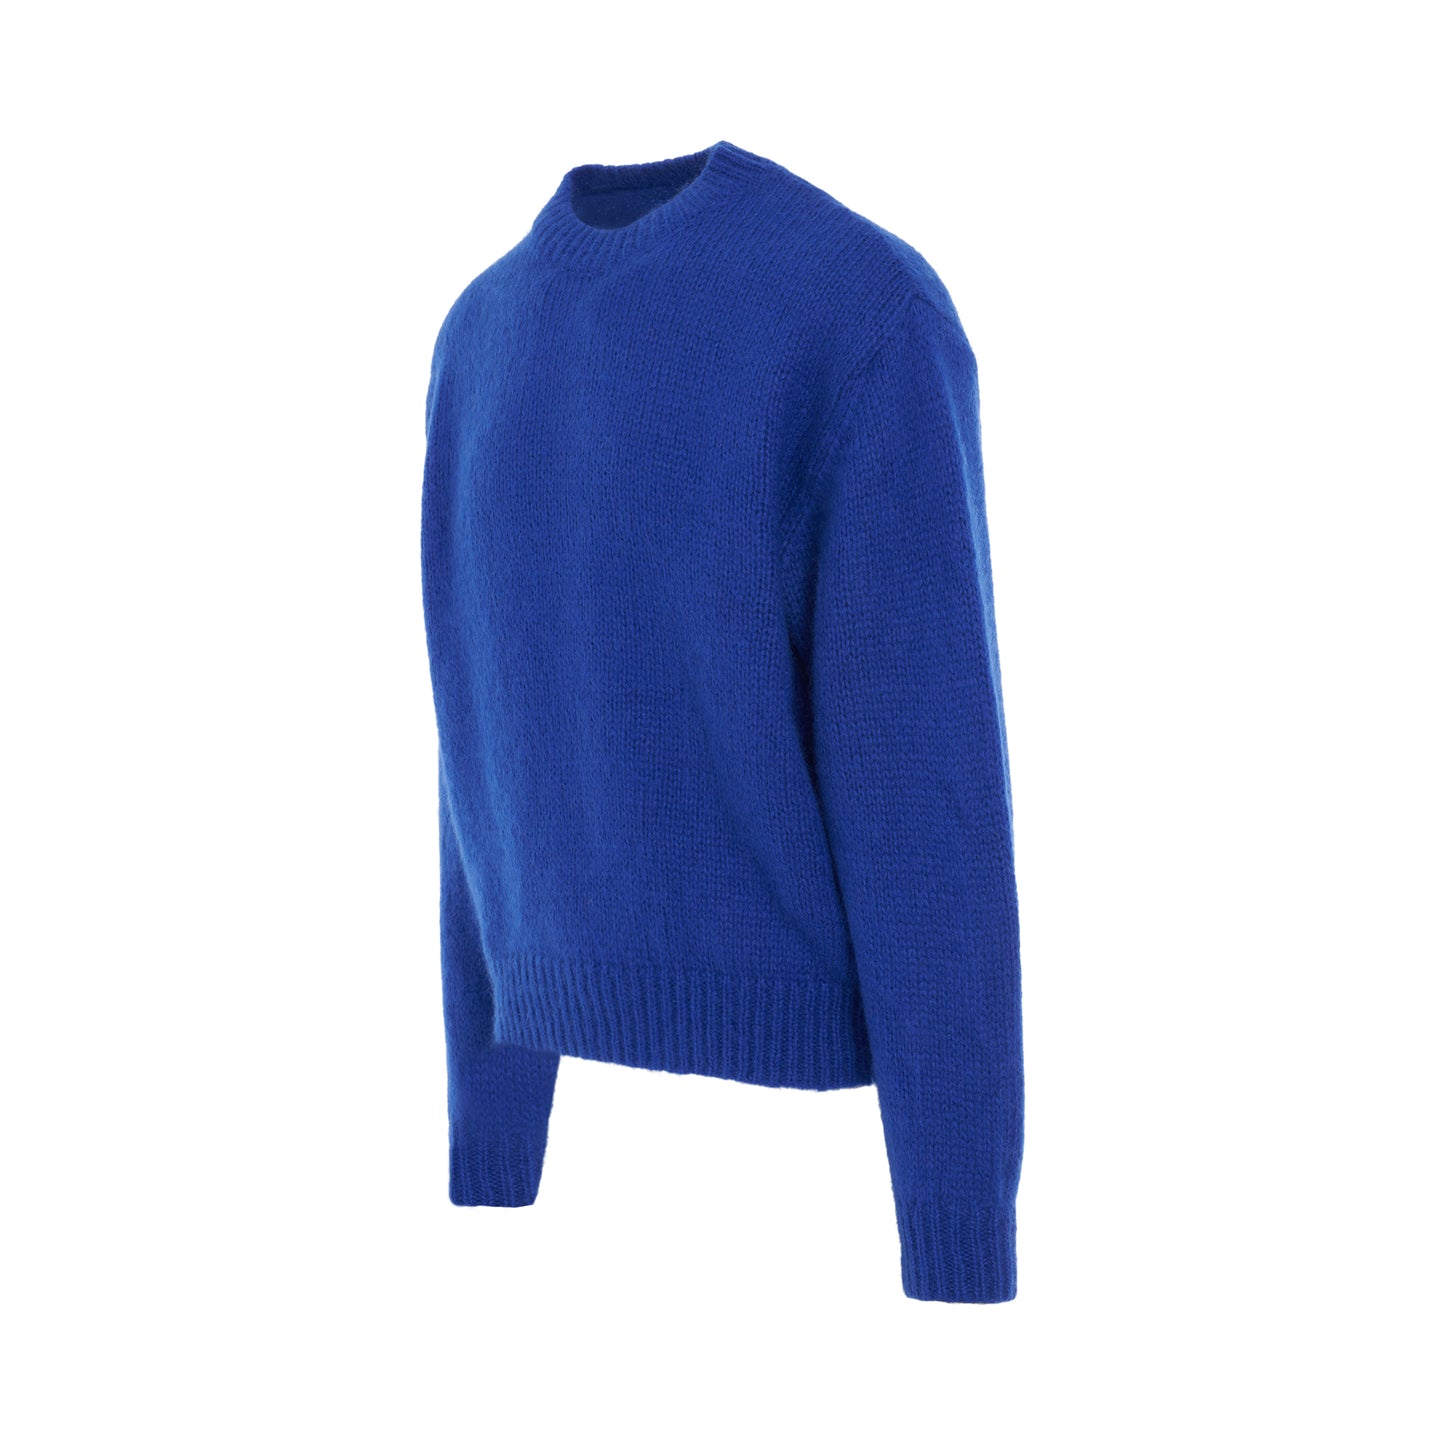 Mohair Sweater in Cobalt Blue